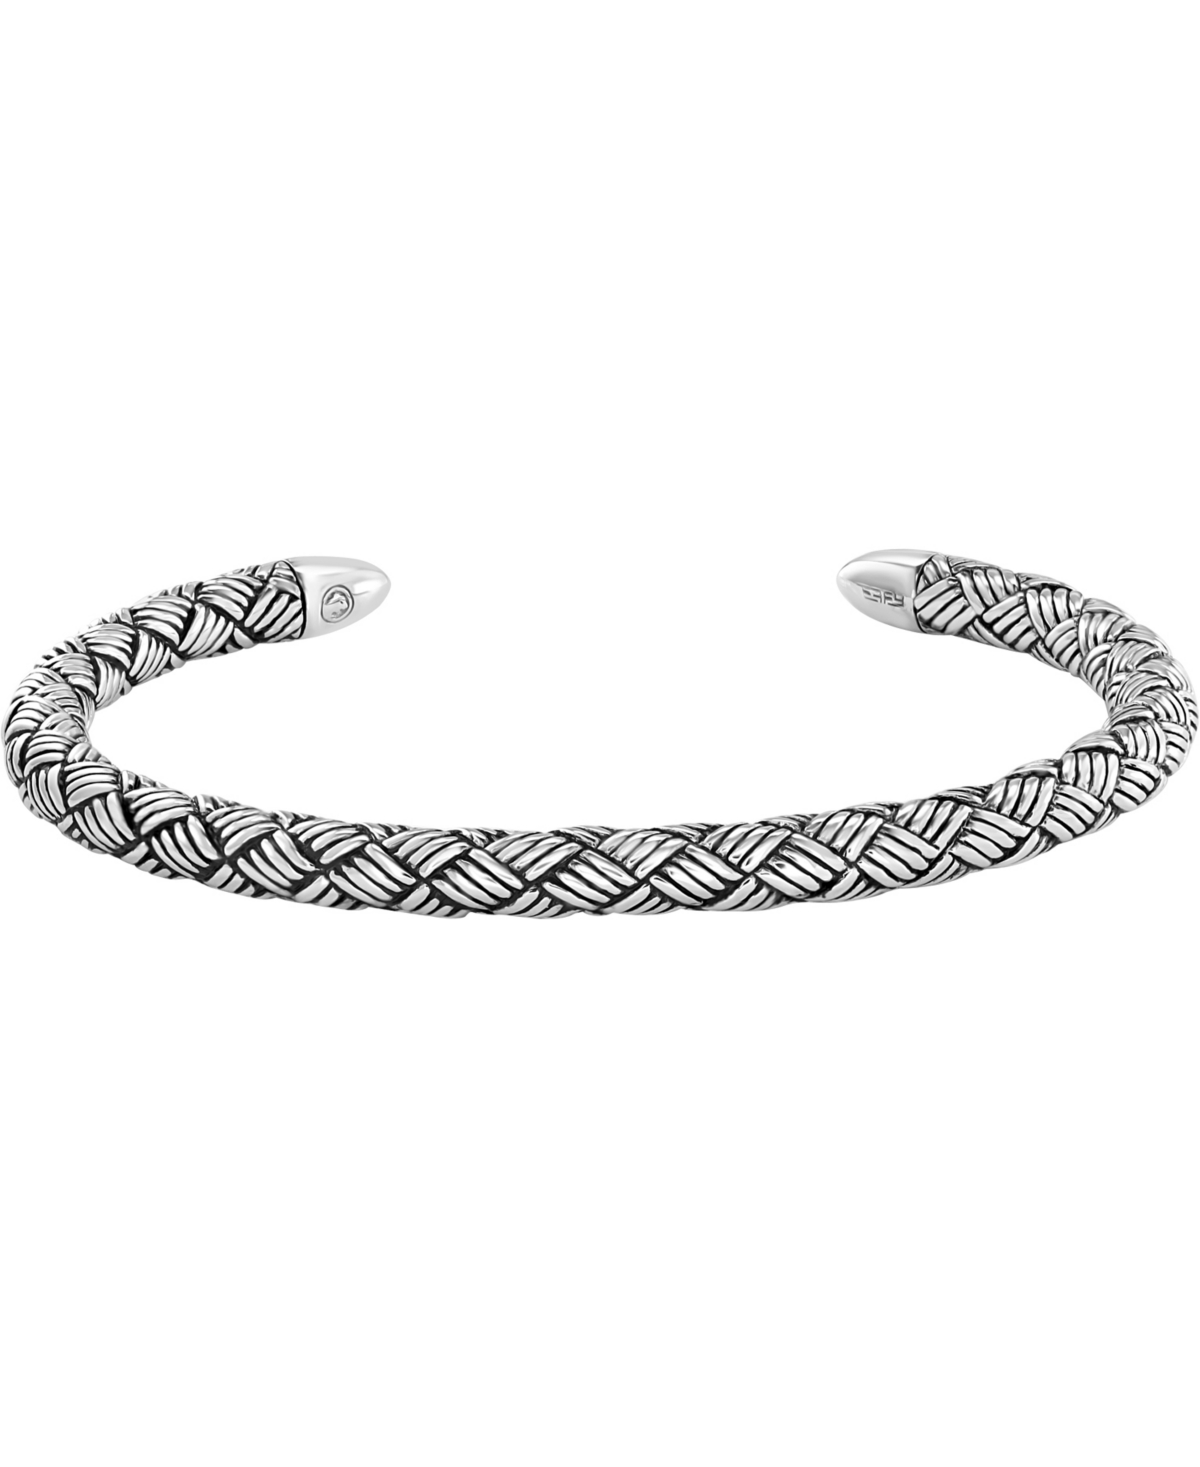 Effy Men's Weave-Style Bangle Bracelet in Sterling Silver - Silver